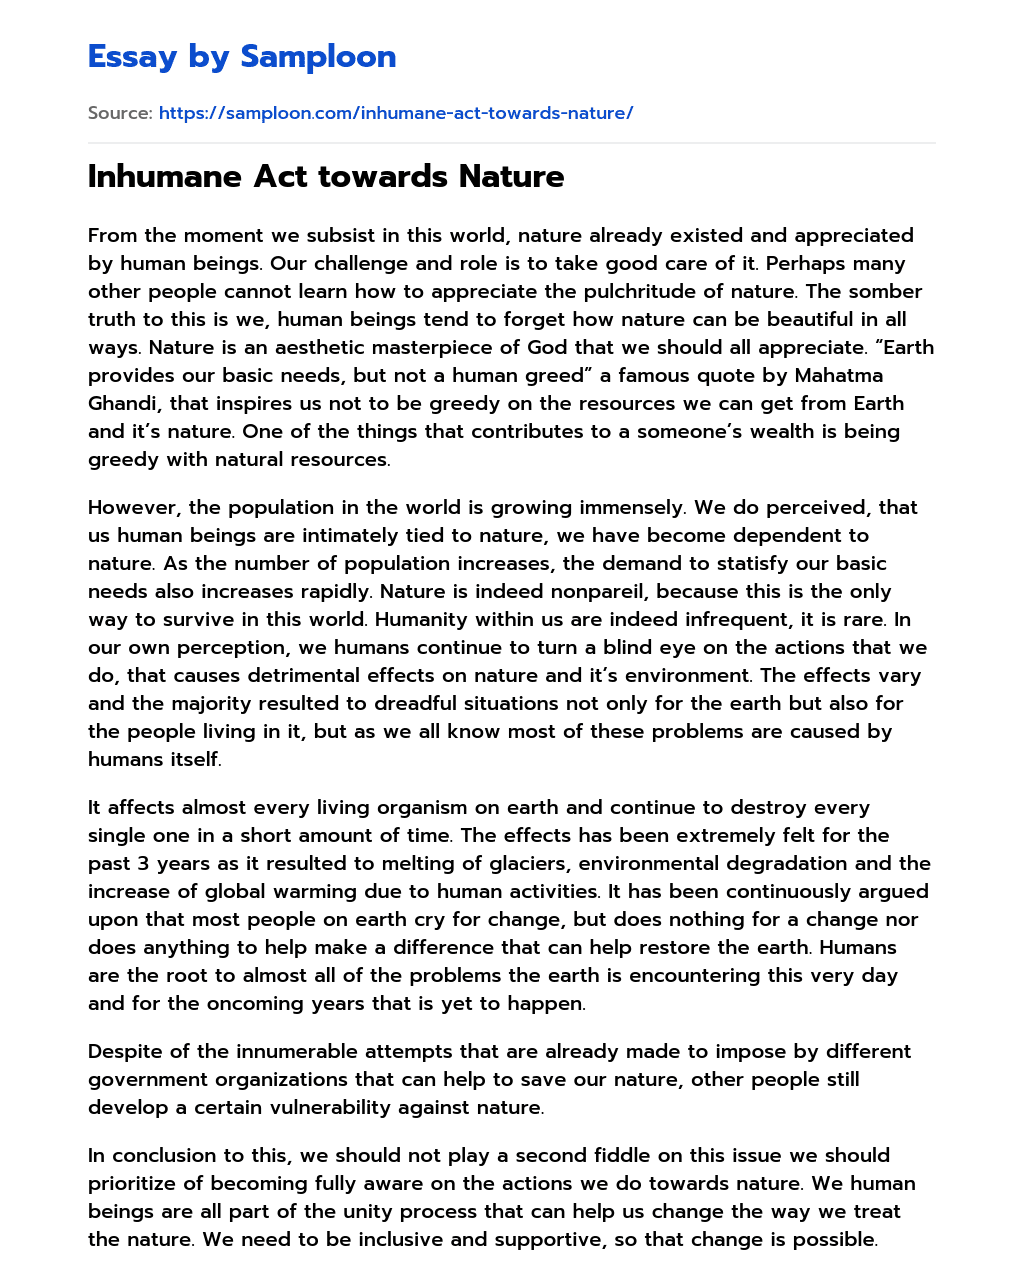 Inhumane Act towards Nature essay